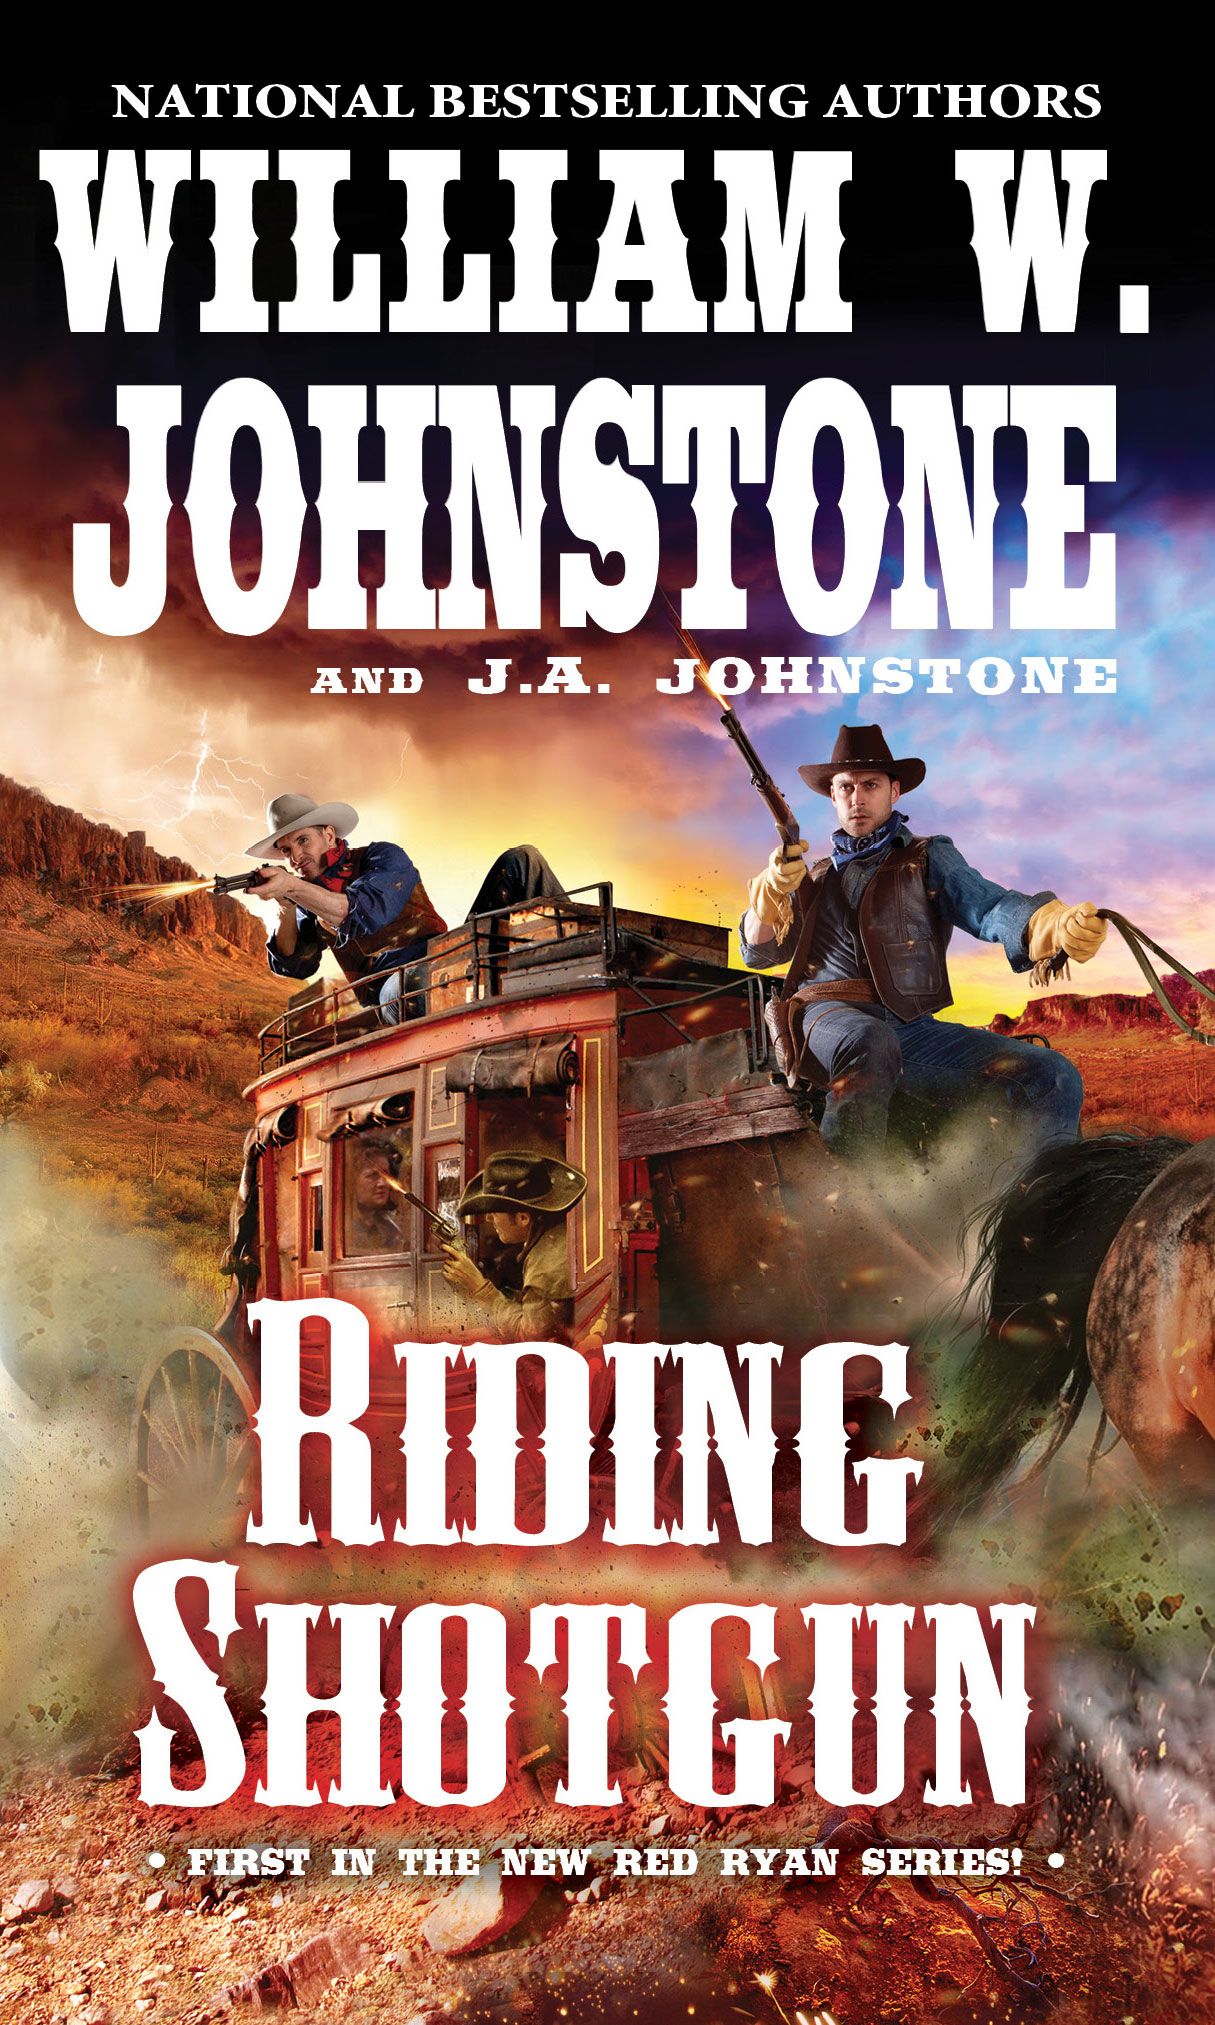 RIDING SHOTGUN by William W. Johnstone and J.A. Johnstone